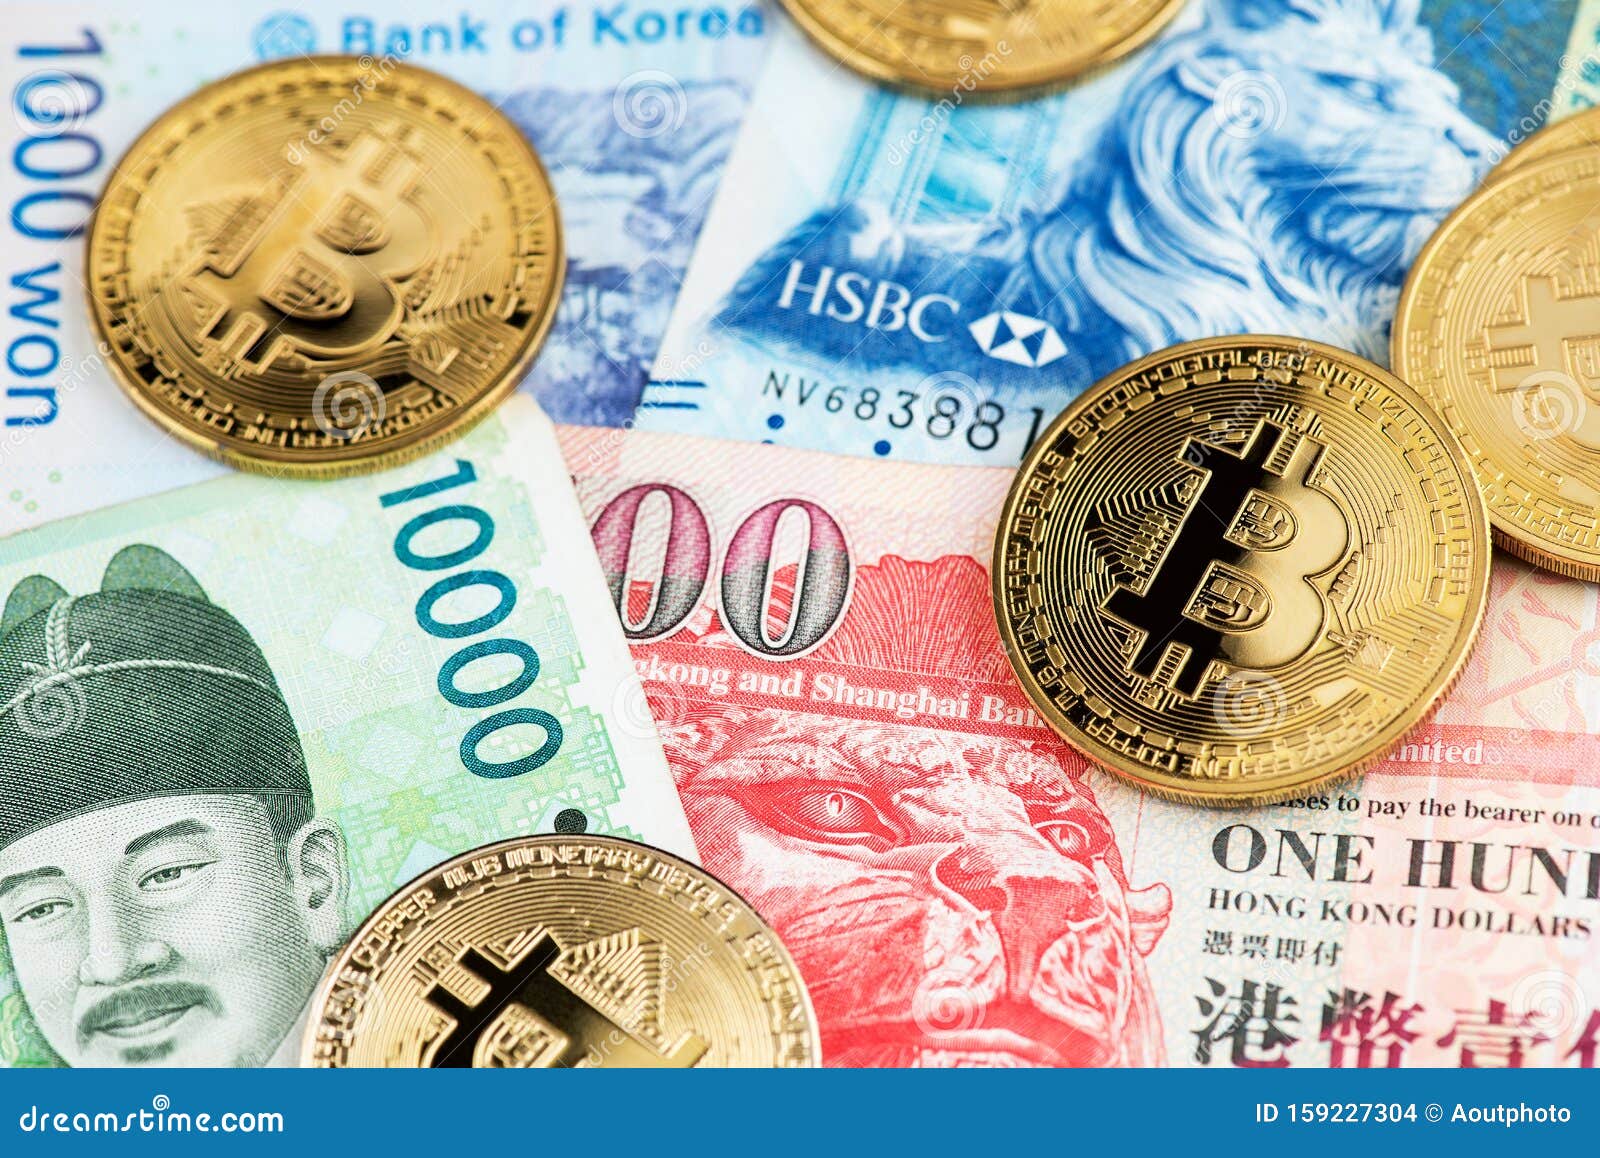 bitcoin bróker korea kripto 101 bitcoin kereskedés